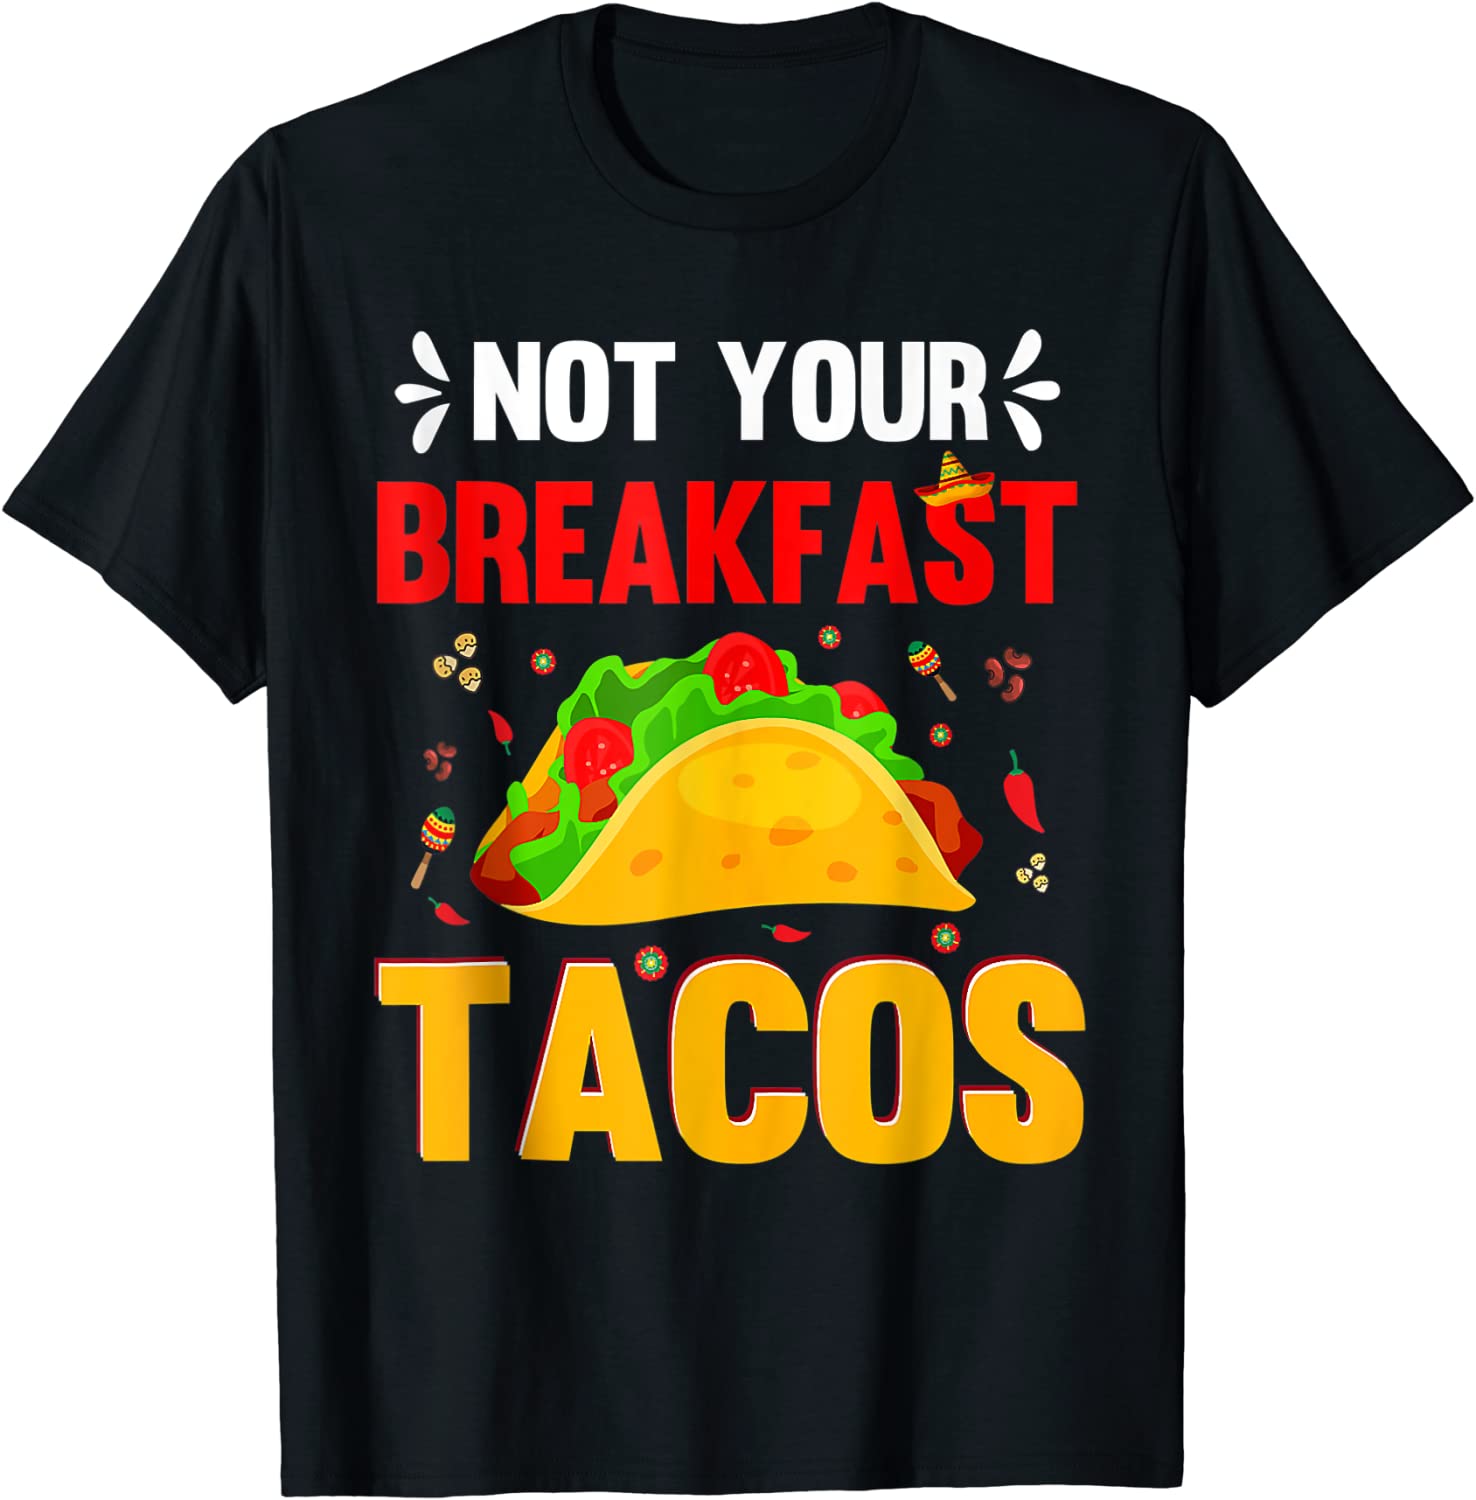 We Are Not Tacos Jill Biden Breakfast Tacos Official T-Shirt ...